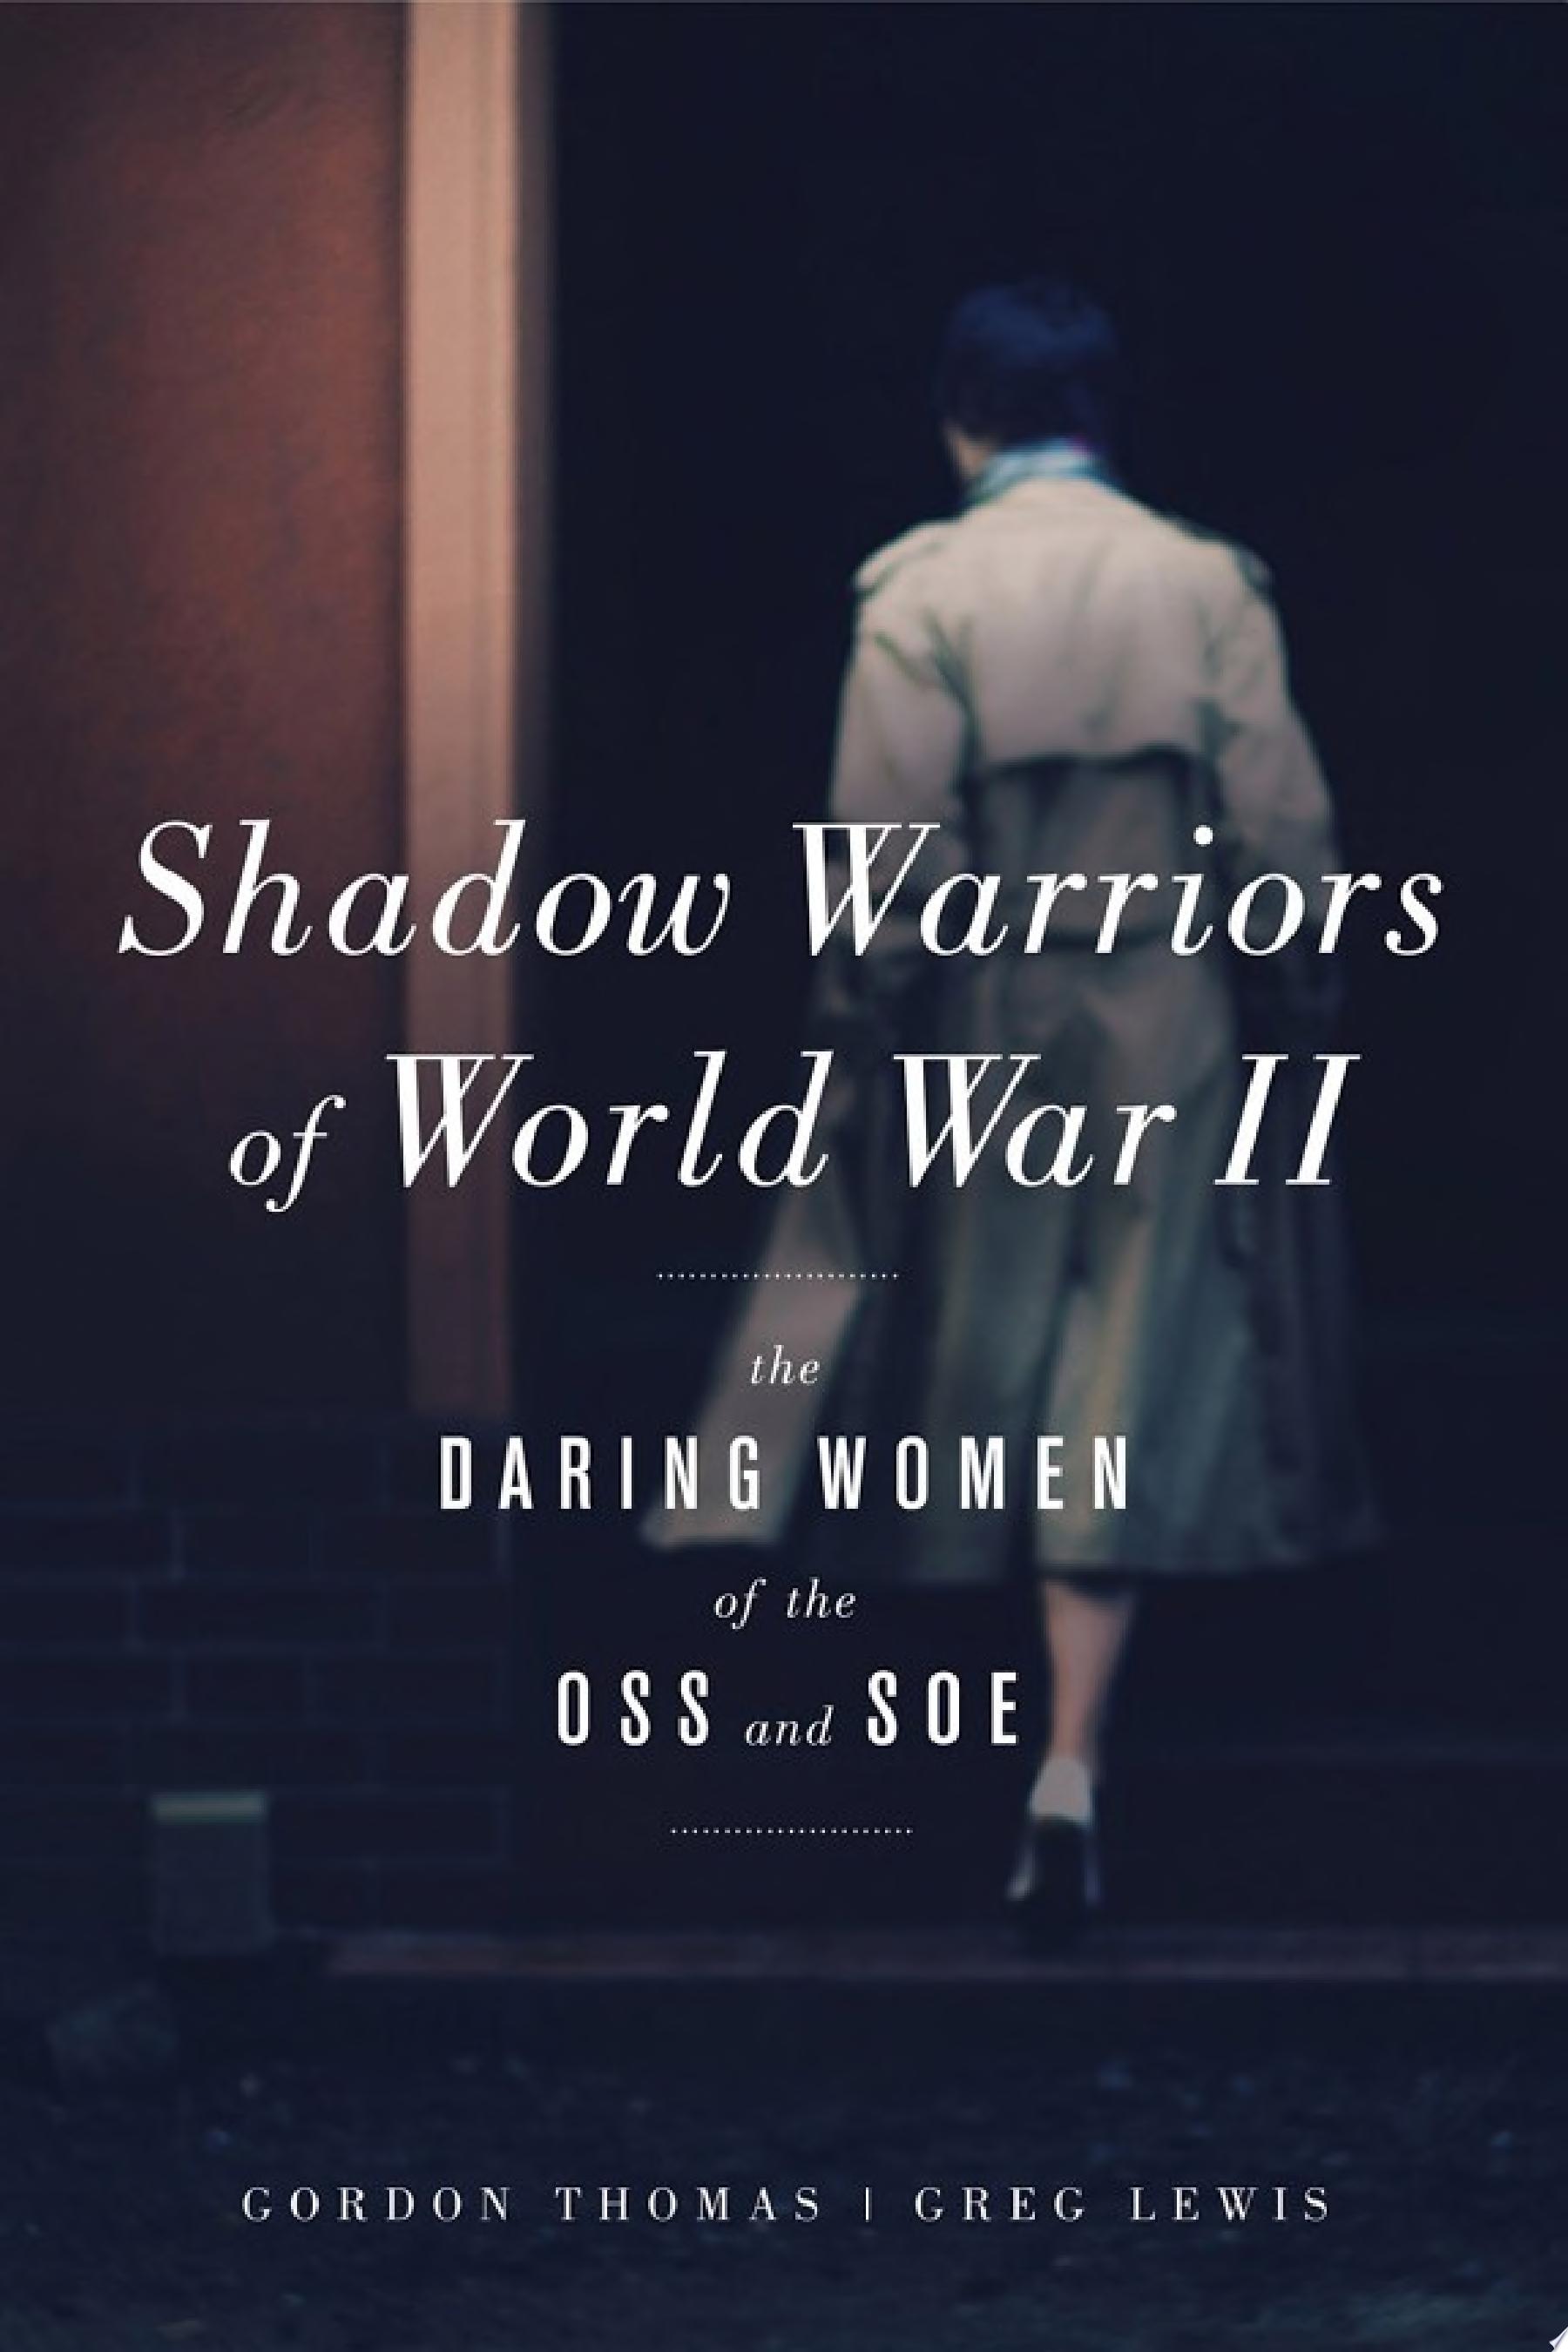 Image for "Shadow Warriors of World War II"